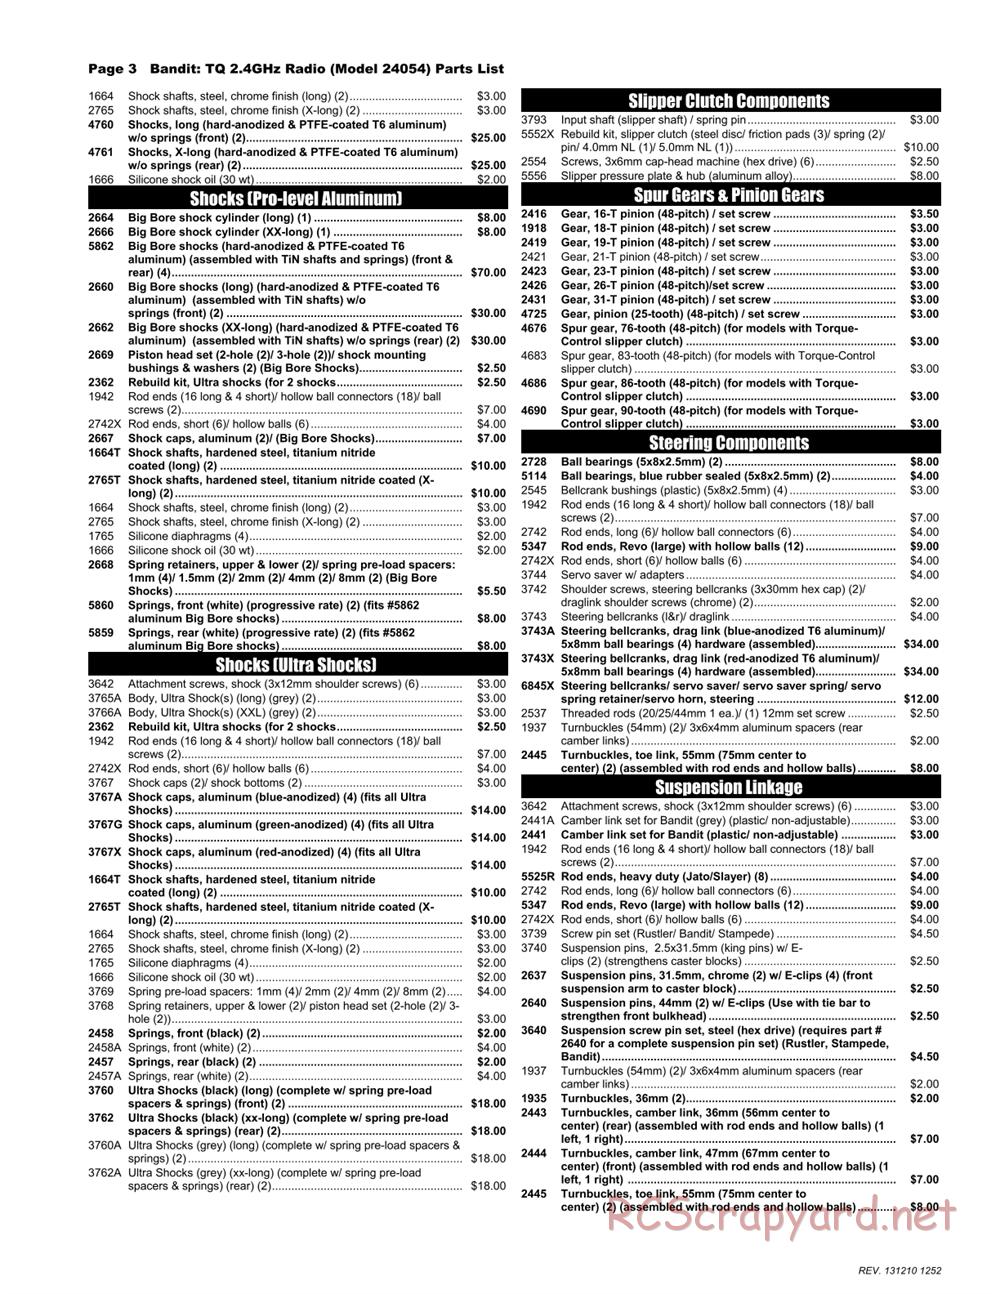 Traxxas - Bandit XL-5 (2013) - Parts List - Page 3